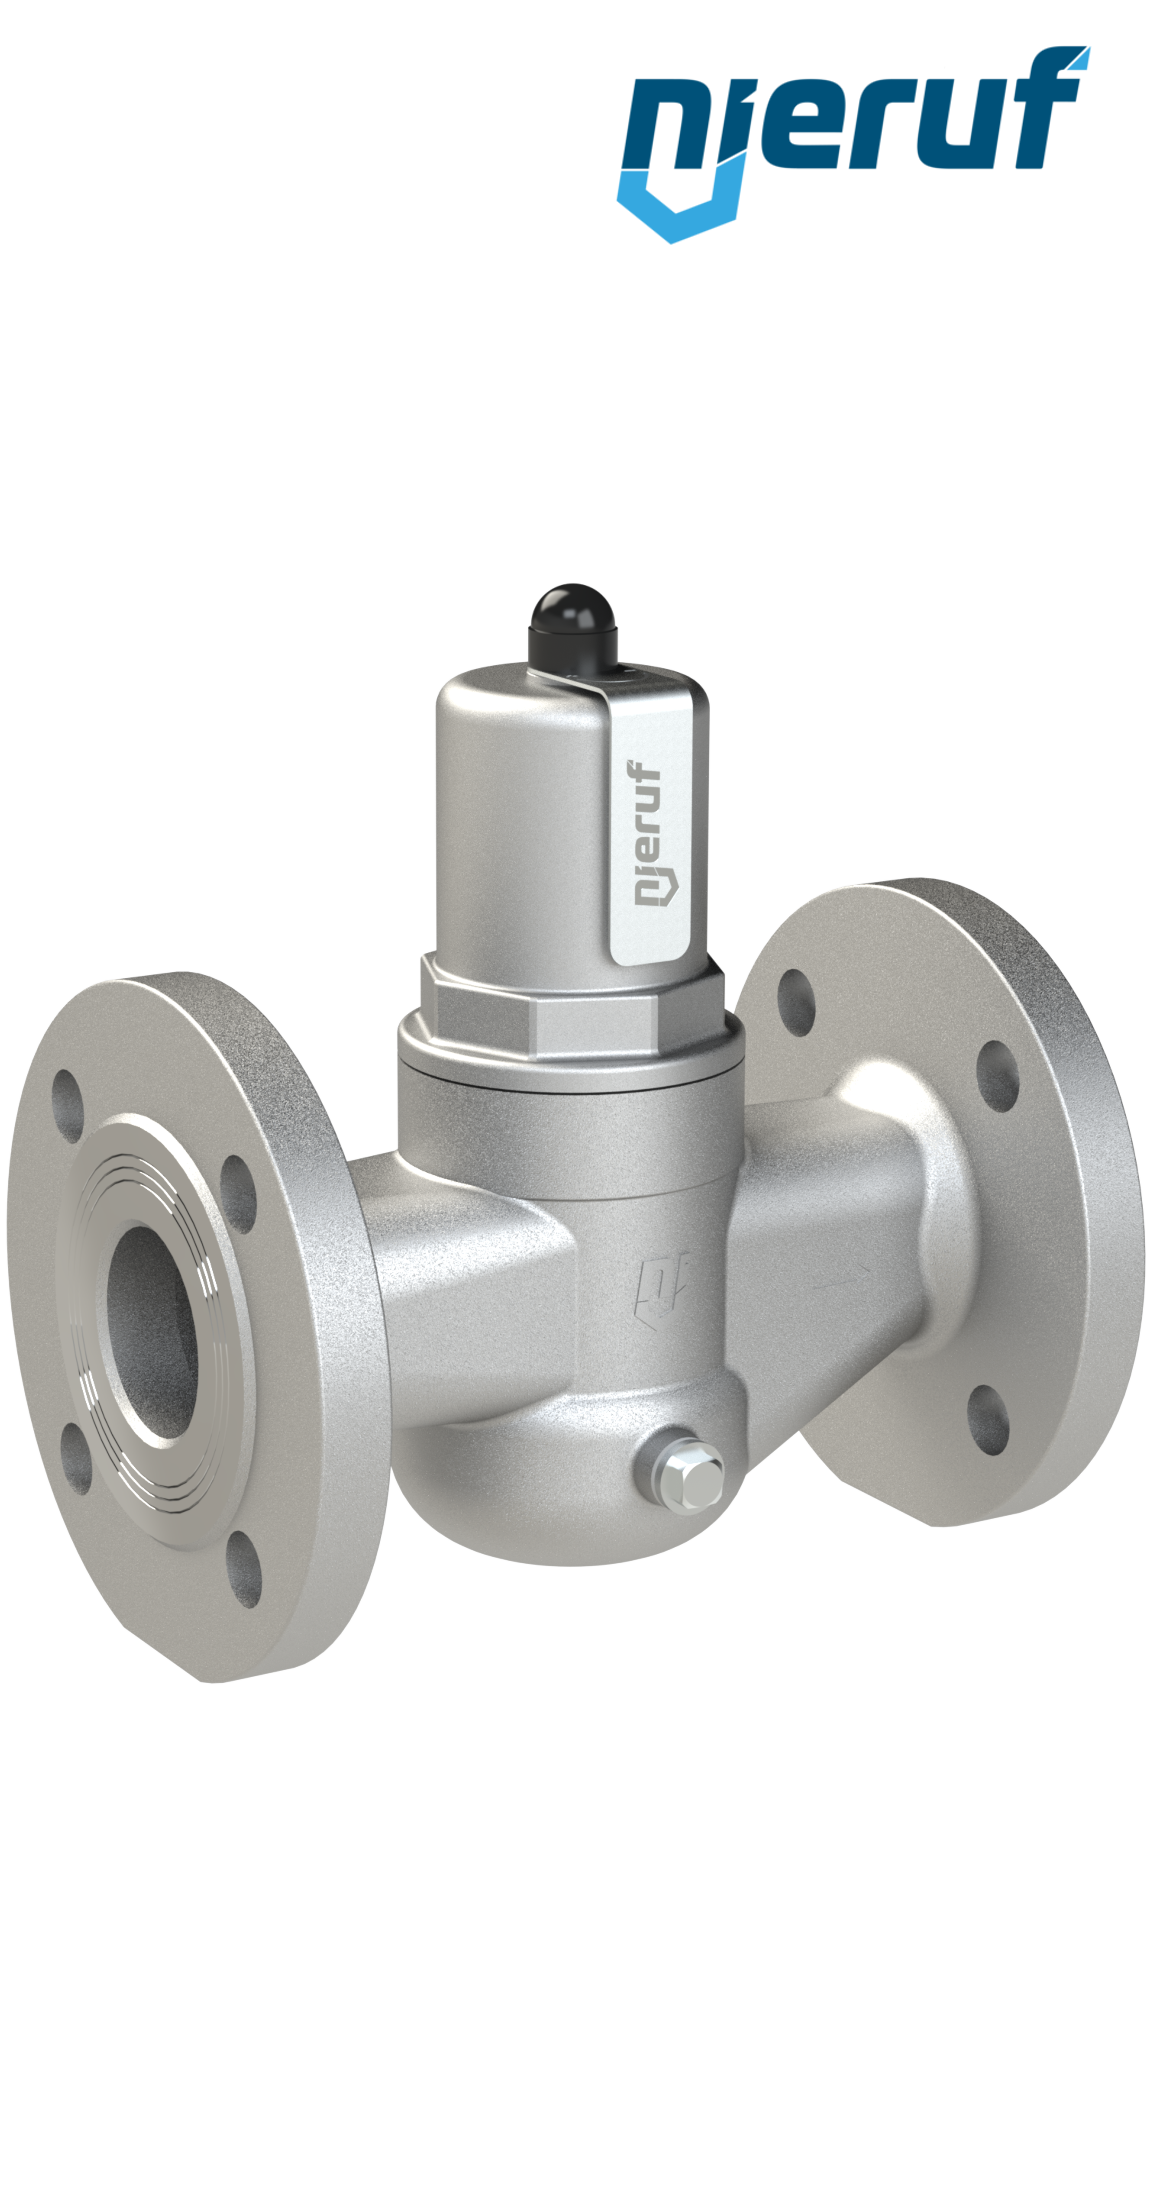 Flange-pressure reducing valve DN 20 PN40 DM07 stainless steel EPDM 5.0 - 15.0 bar